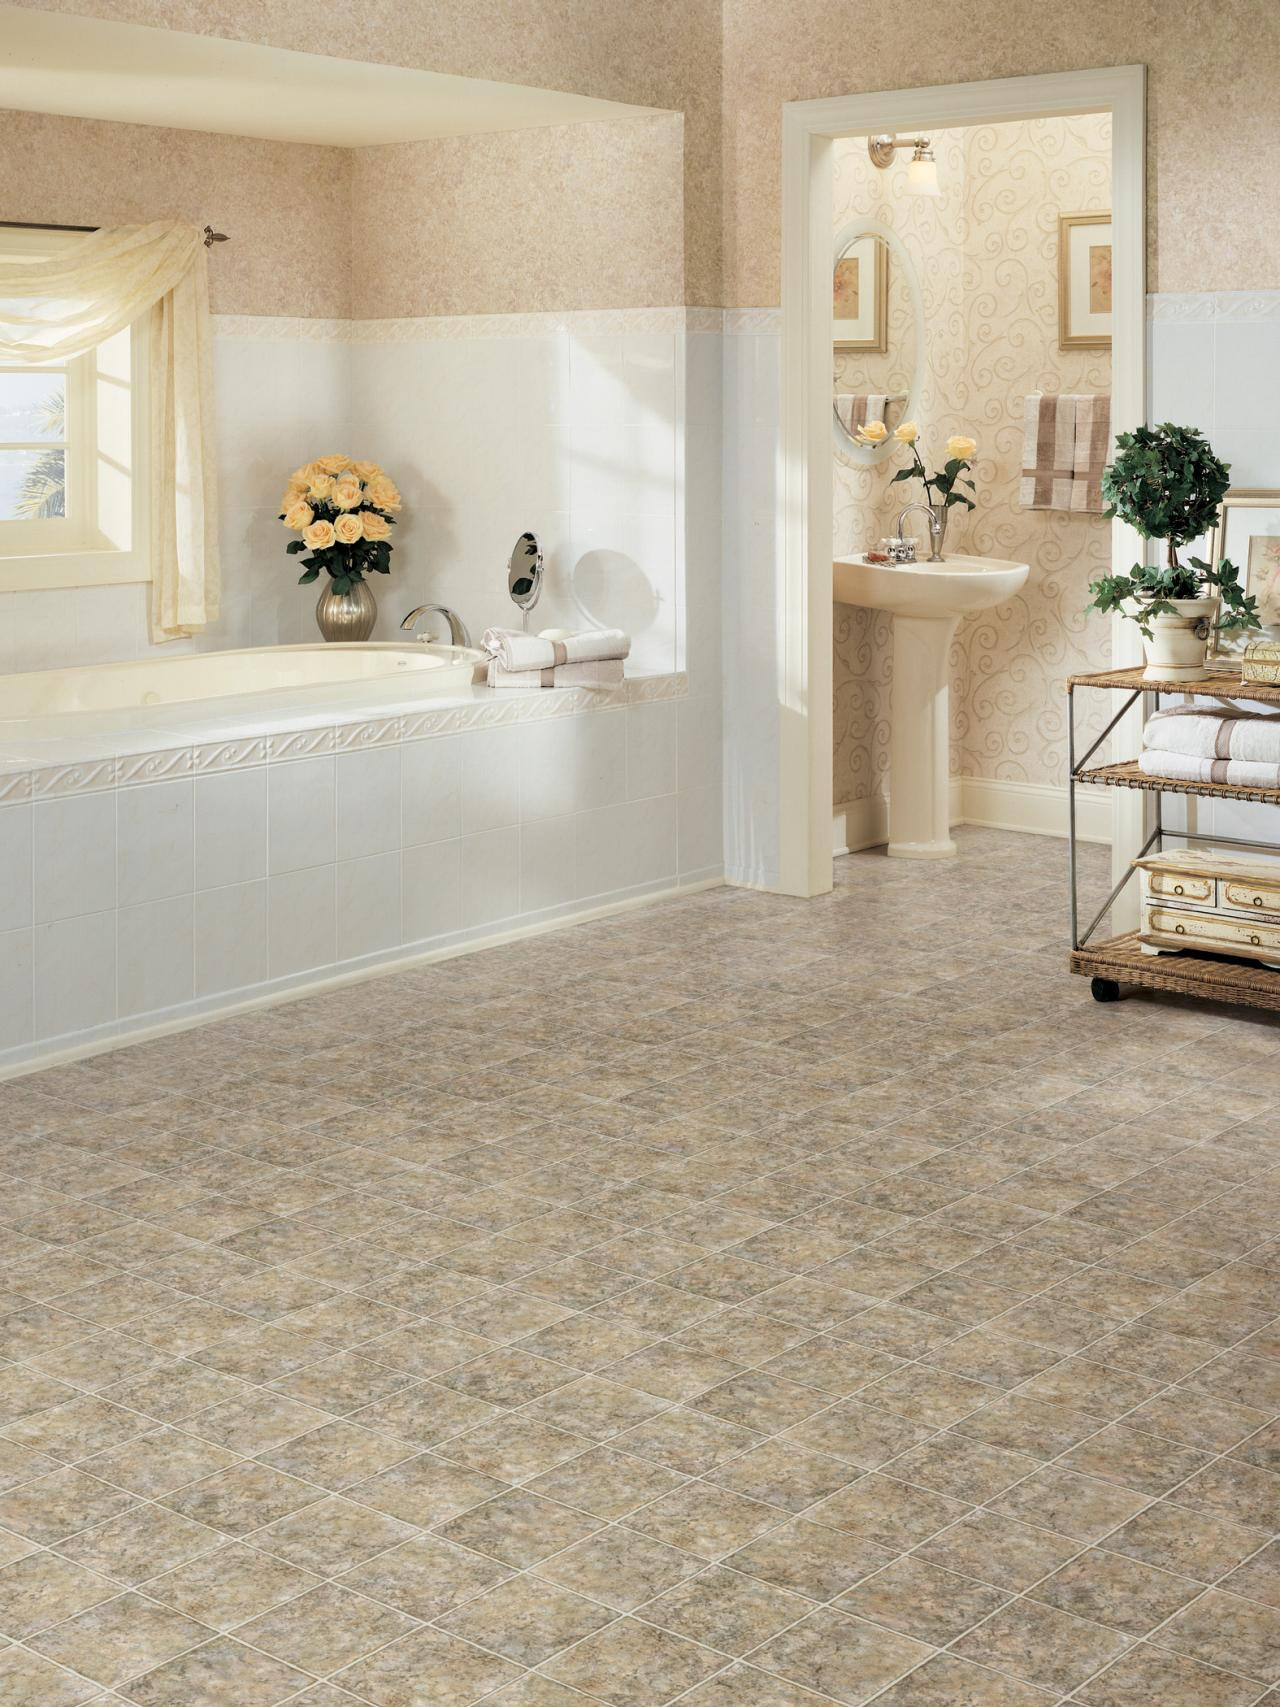 Vinyl Tile Bathrooms
 30 stunning pictures and ideas of vinyl flooring bathroom